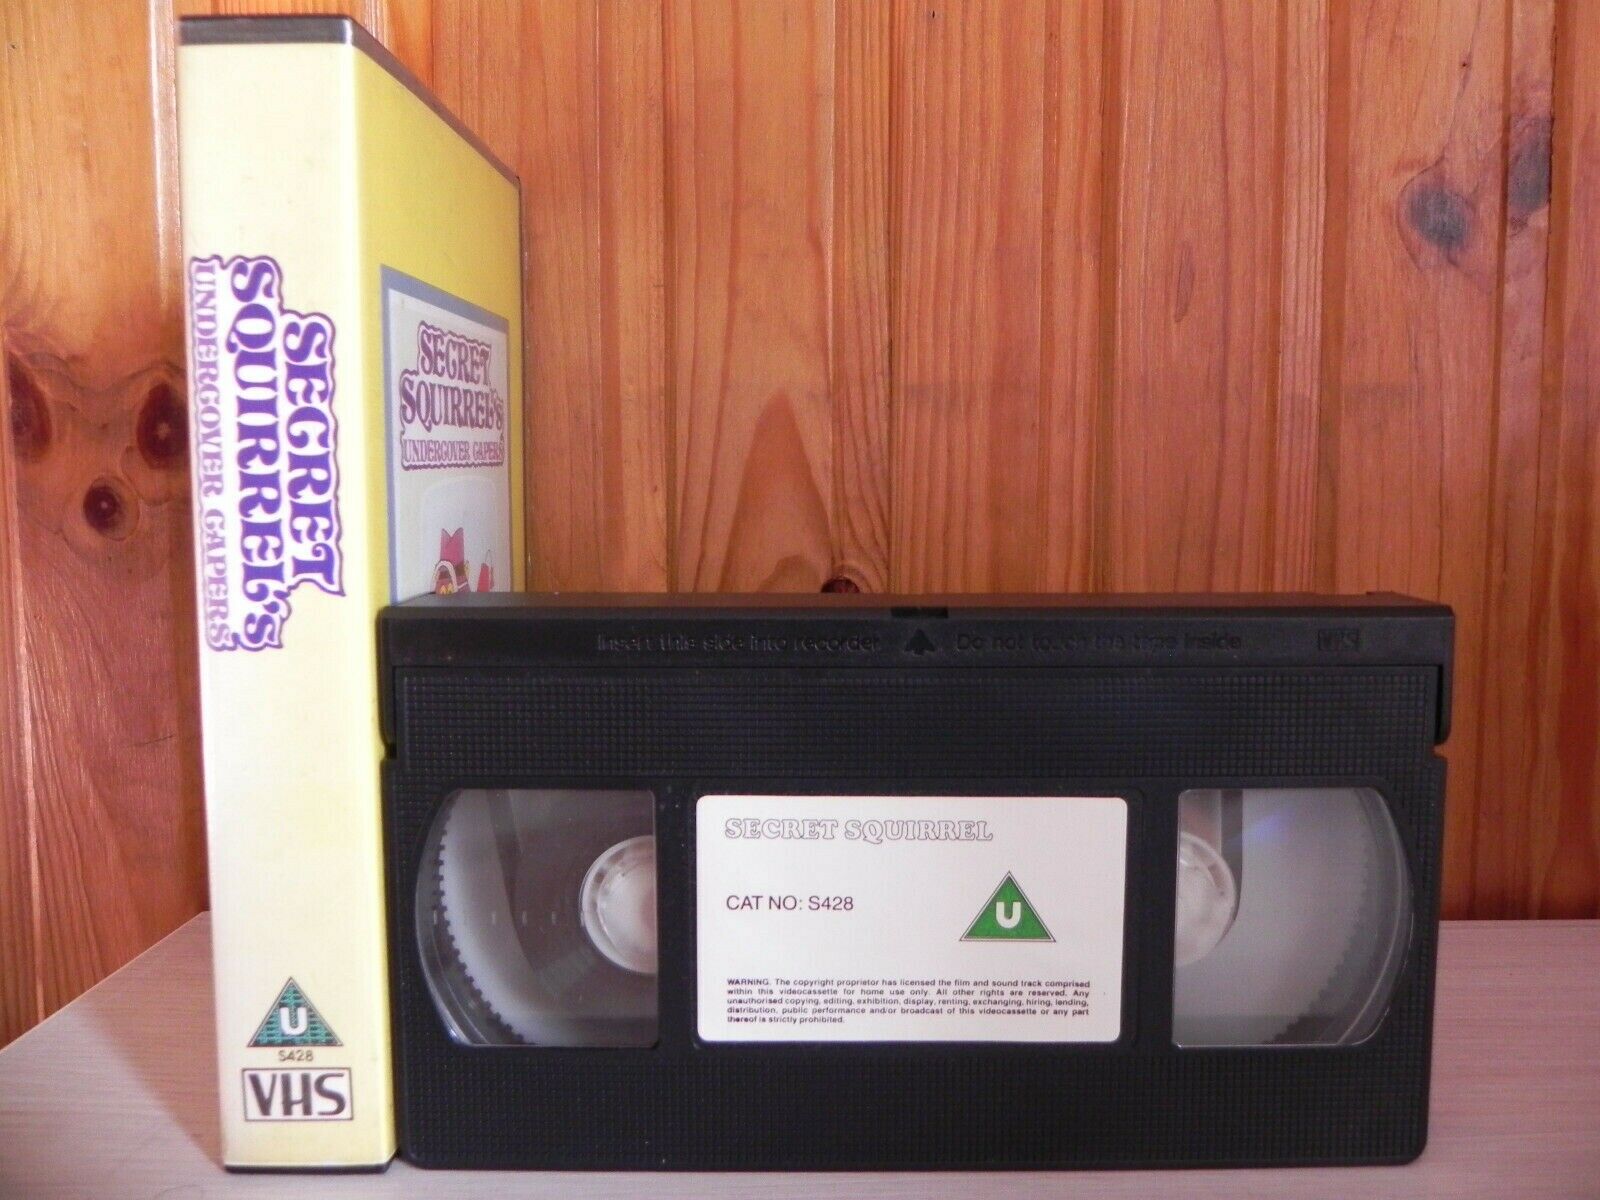 SECRET SQUIRREL'S - UNDERCOVER CAPERS - 1986 - HANNA-BARBERA VIDEO - S428 - VHS-